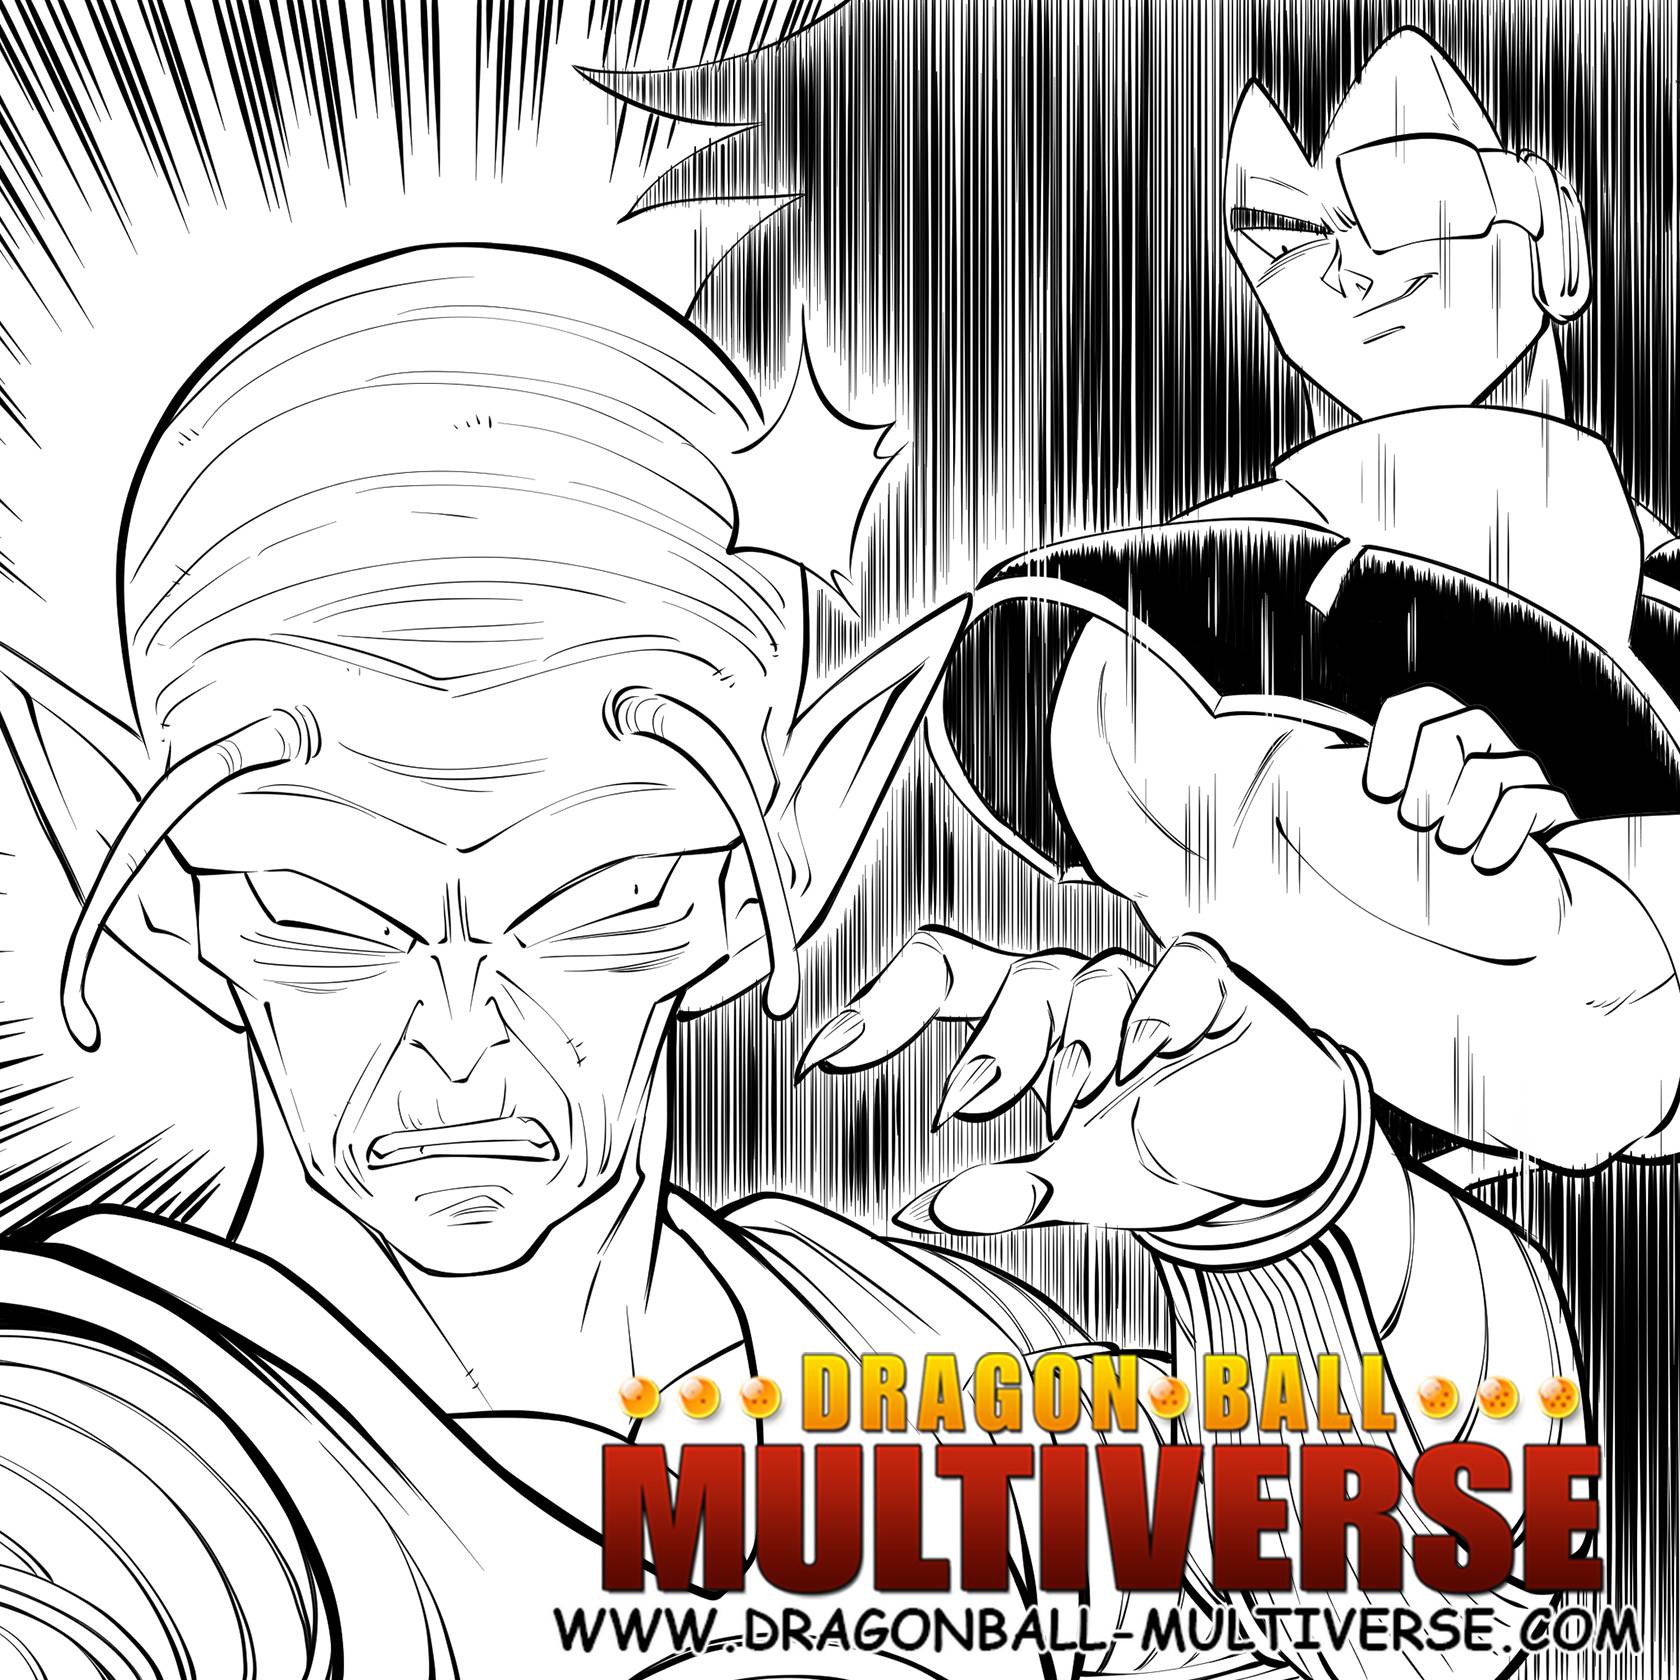 Dragon Ball Multiverse on X: FR : ATTENTION ! EN : BE CAREFUL ! >NEW DBM  PAGE : 1454  #dbz #manga #doujinshi #fanfic  #dragonballz #webcomic #DBMultiverse  / X